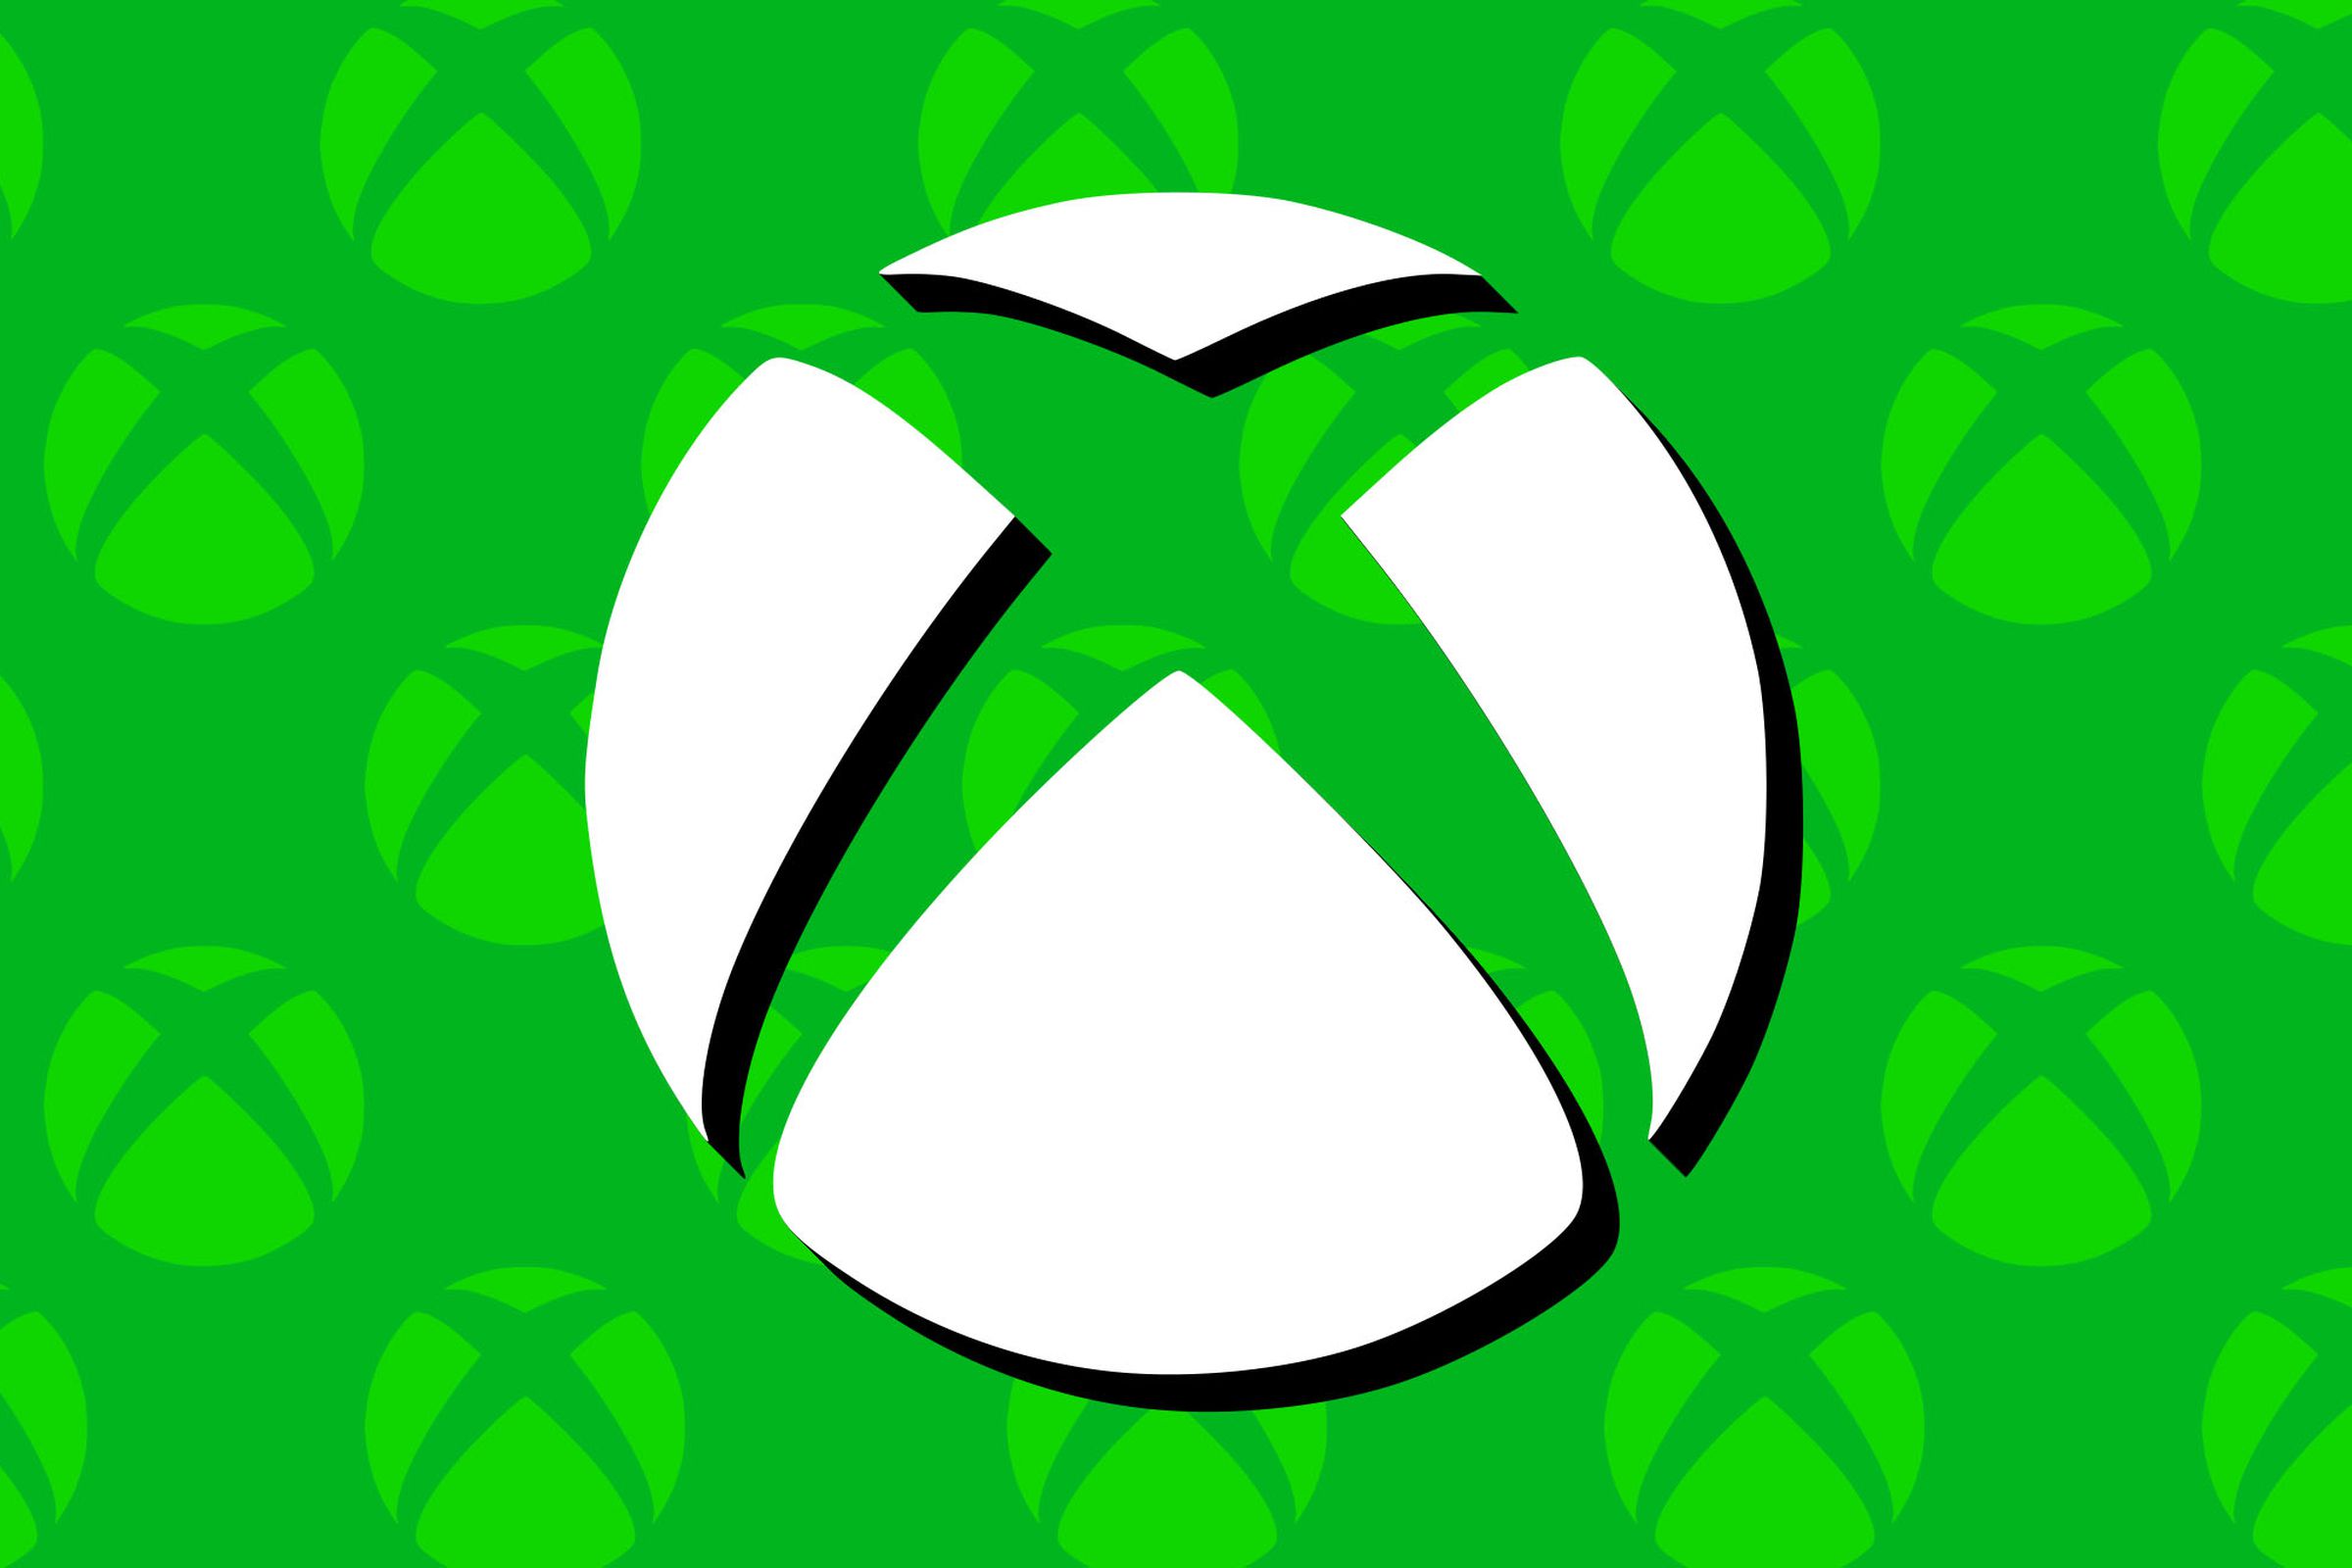 Vector illustration of the Xbox logo.